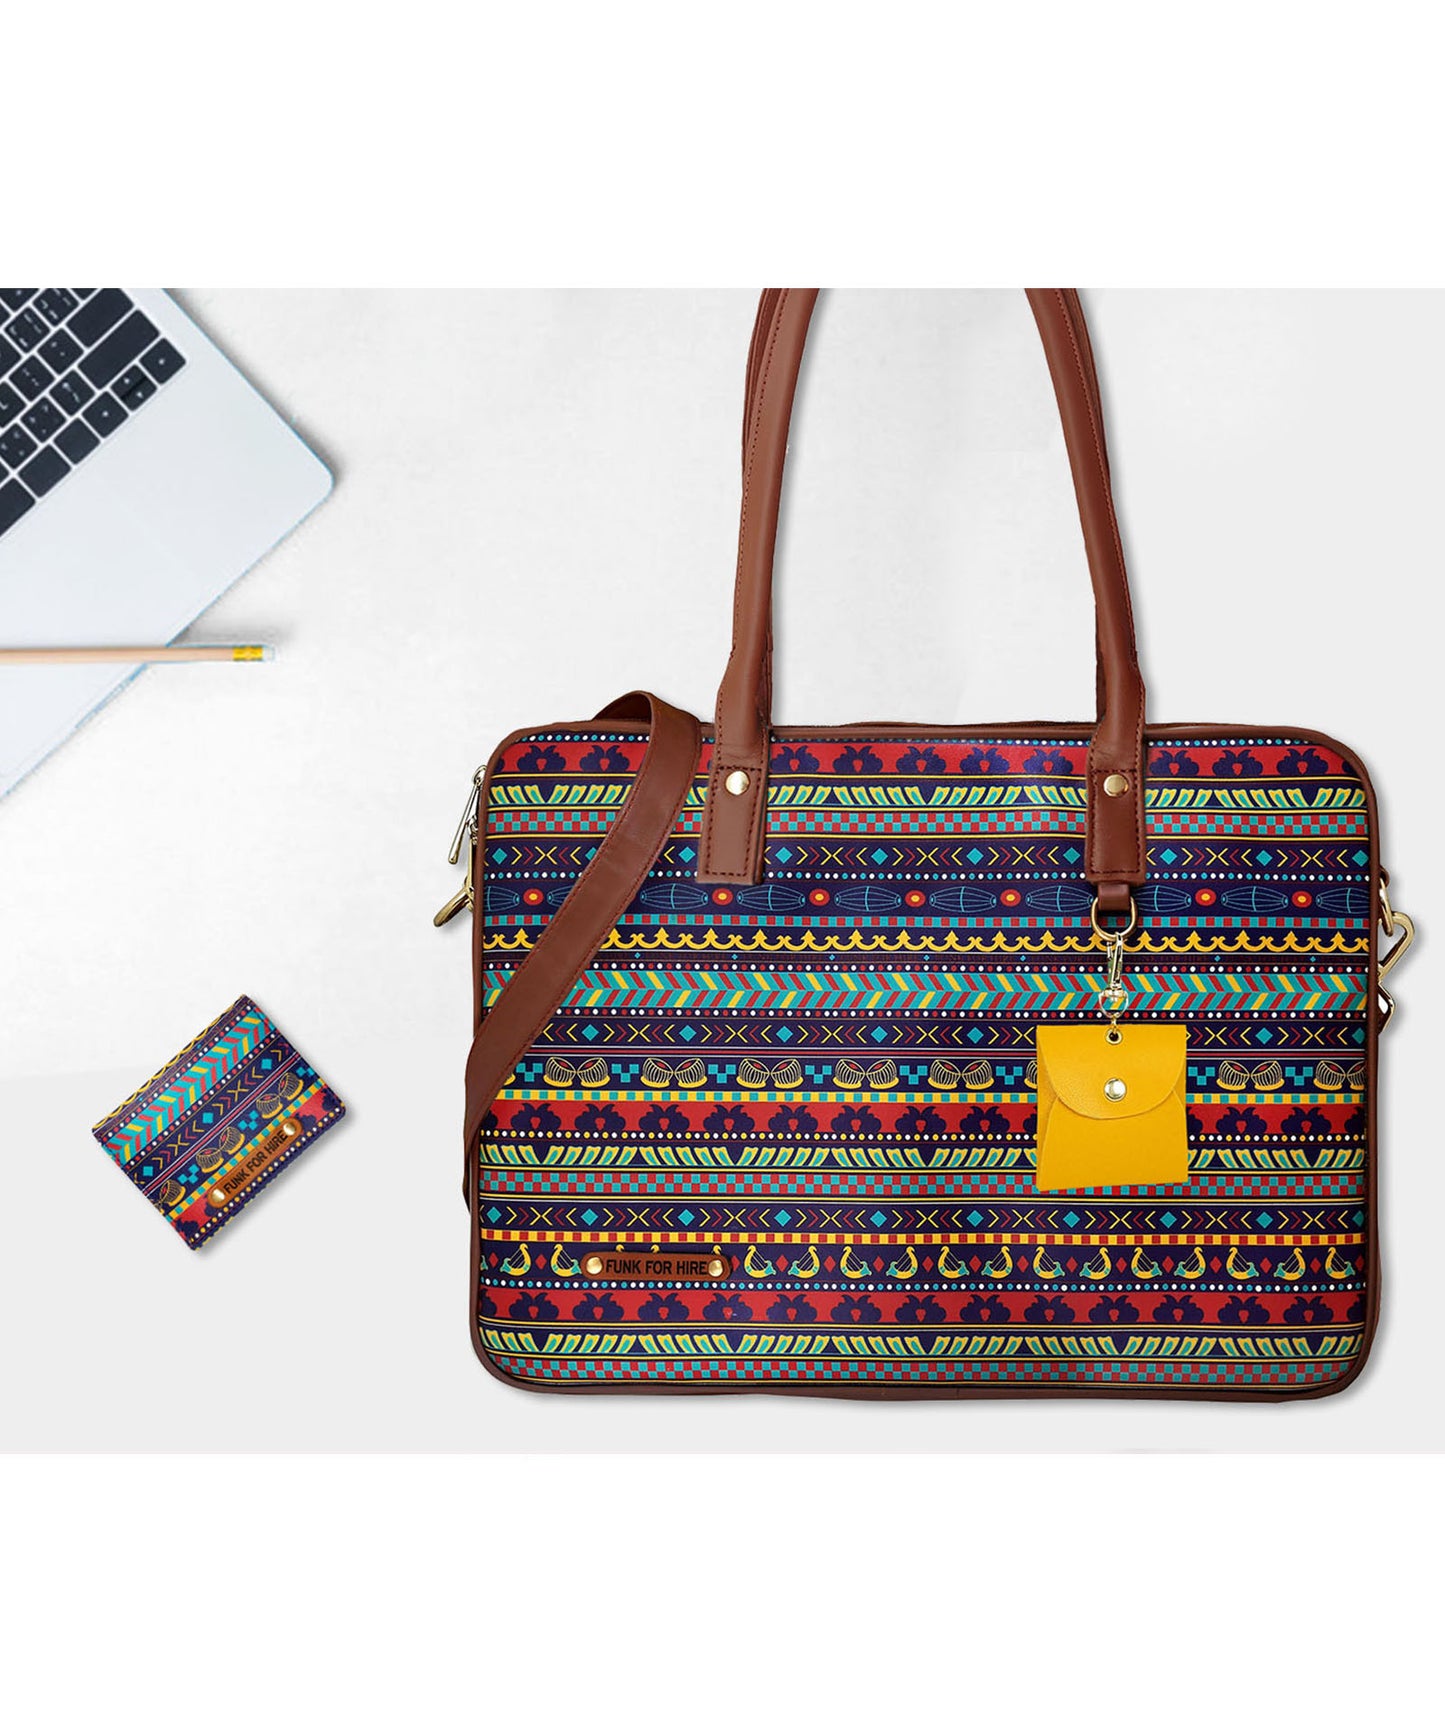 Combo Offers : Music Border Laptop Multi Handbag & Pocket Multicolour Wallet